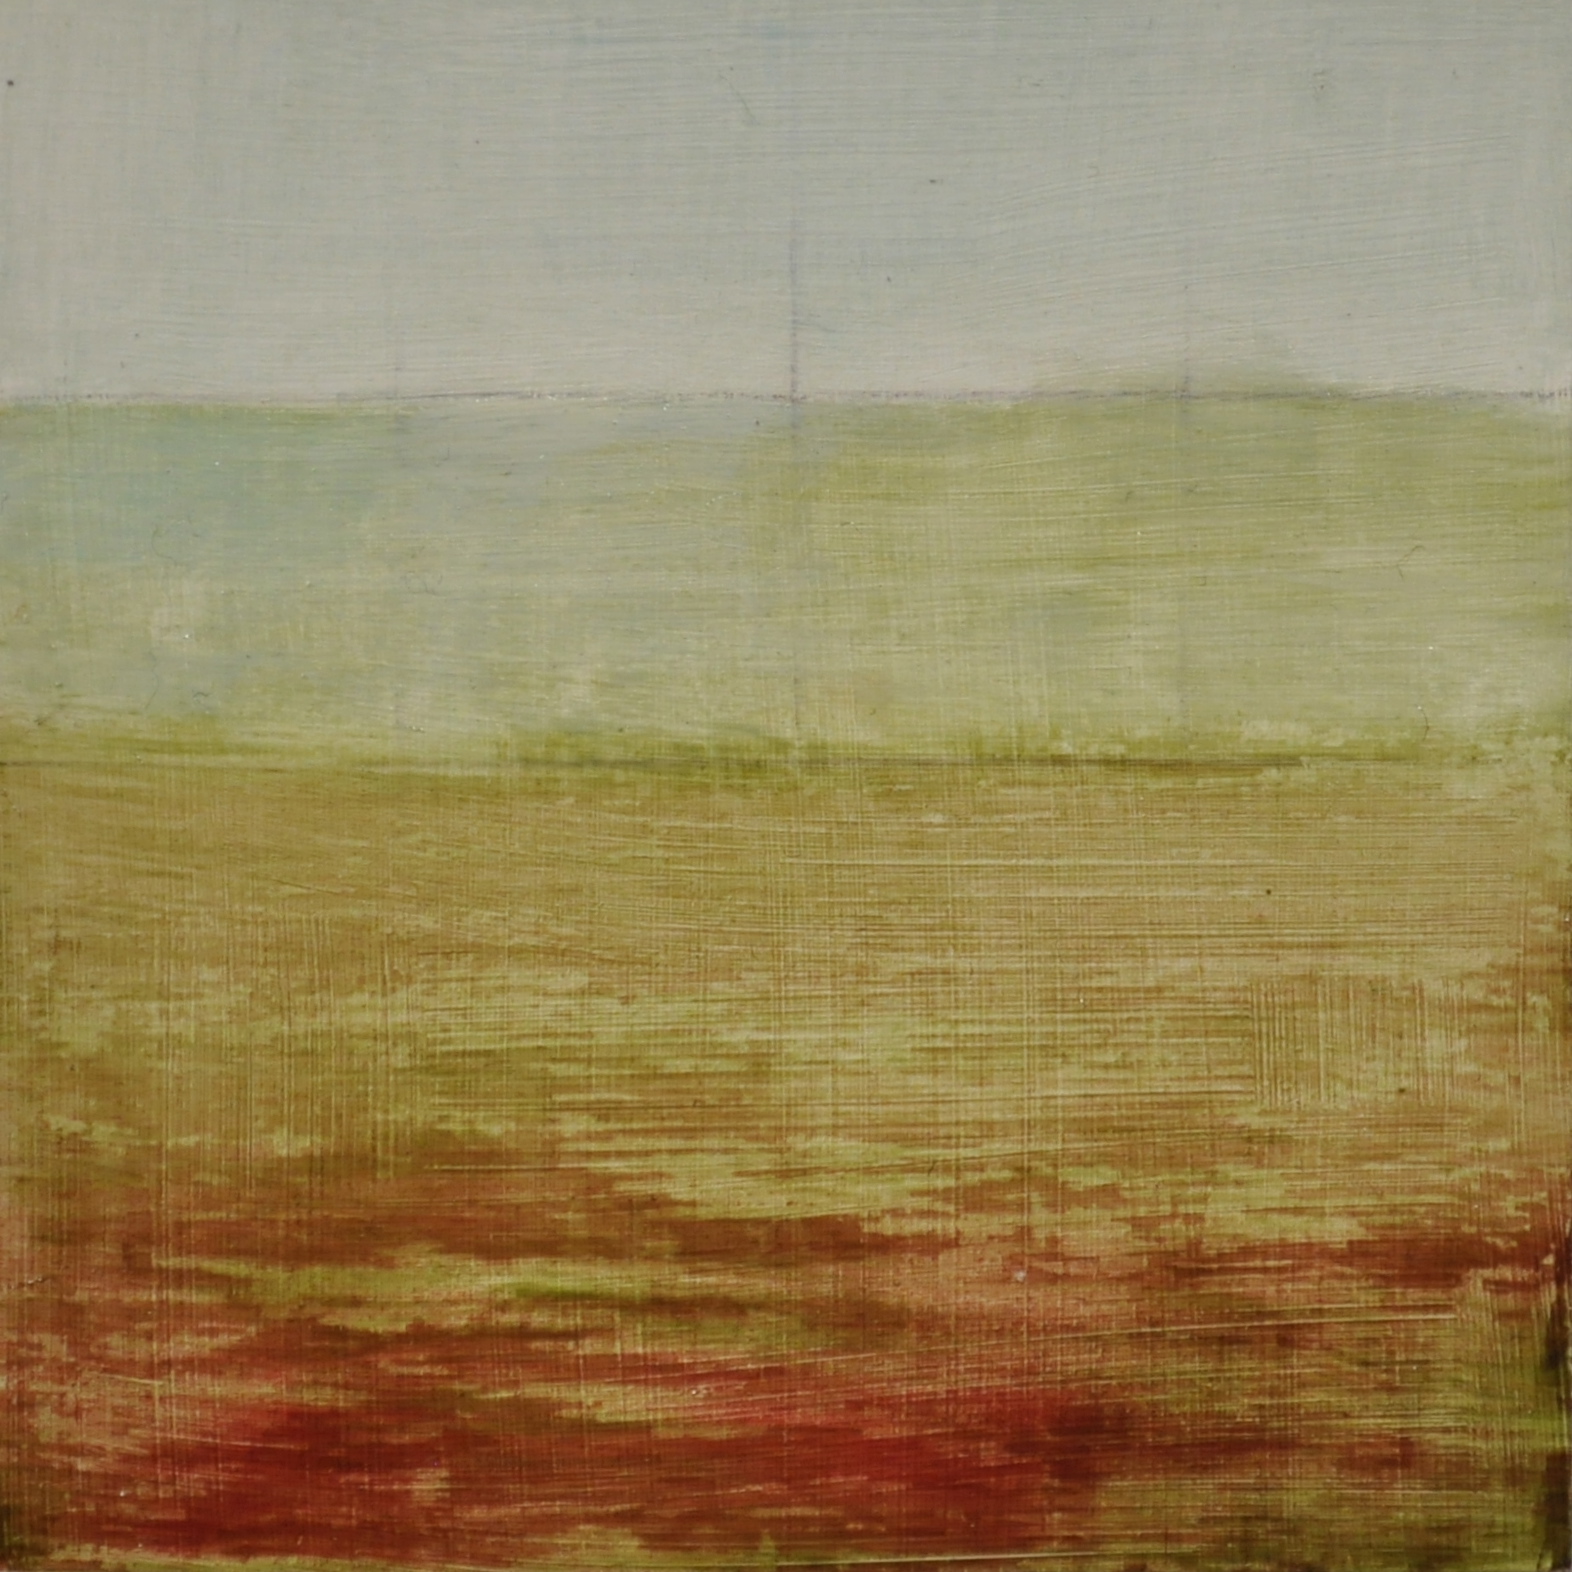  land strips, 2016  oil on wood panel, 10 x 10 cm 